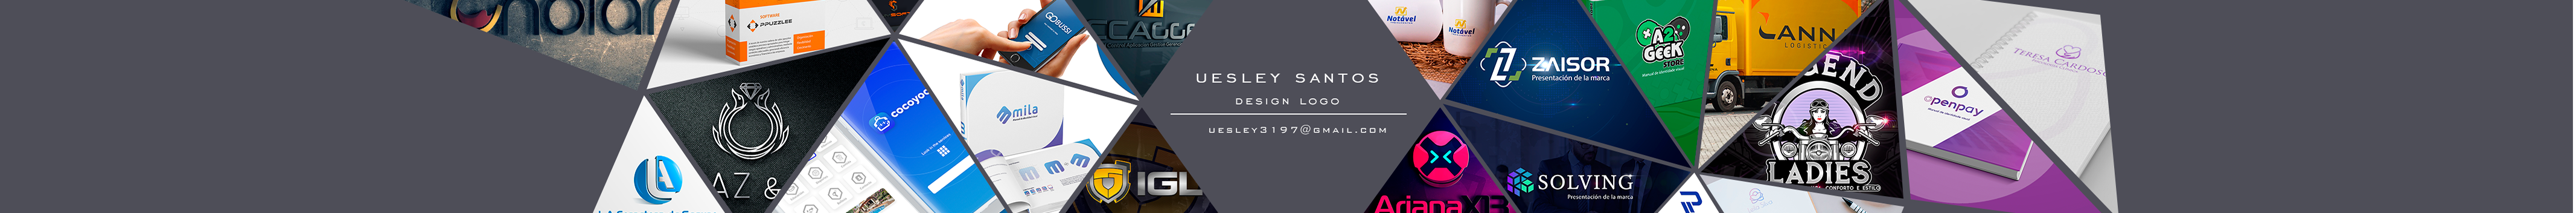 Uesley Melo dos Santos profil başlığı